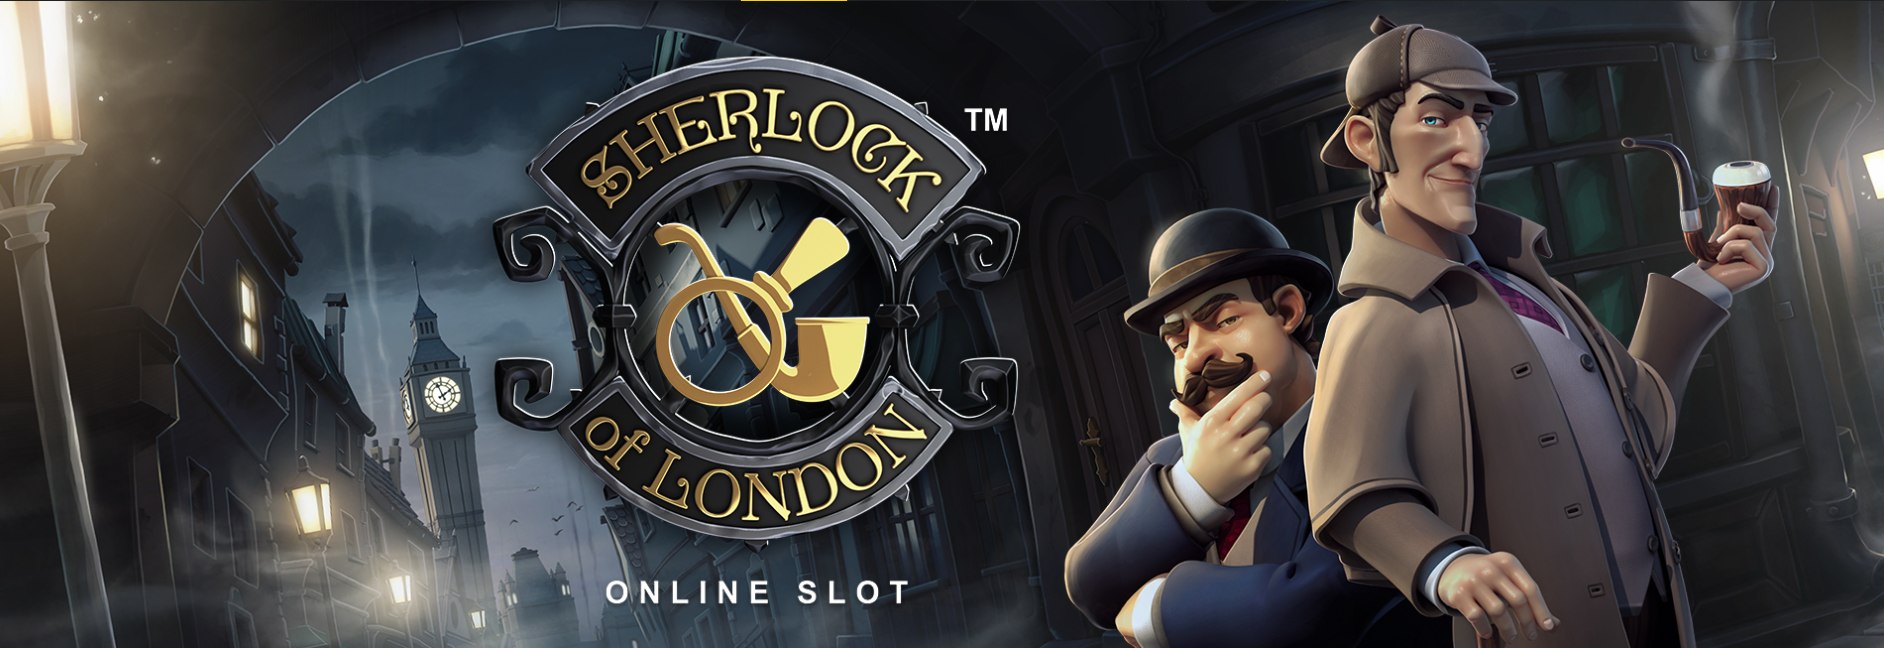 Sherlock of London Slot Review